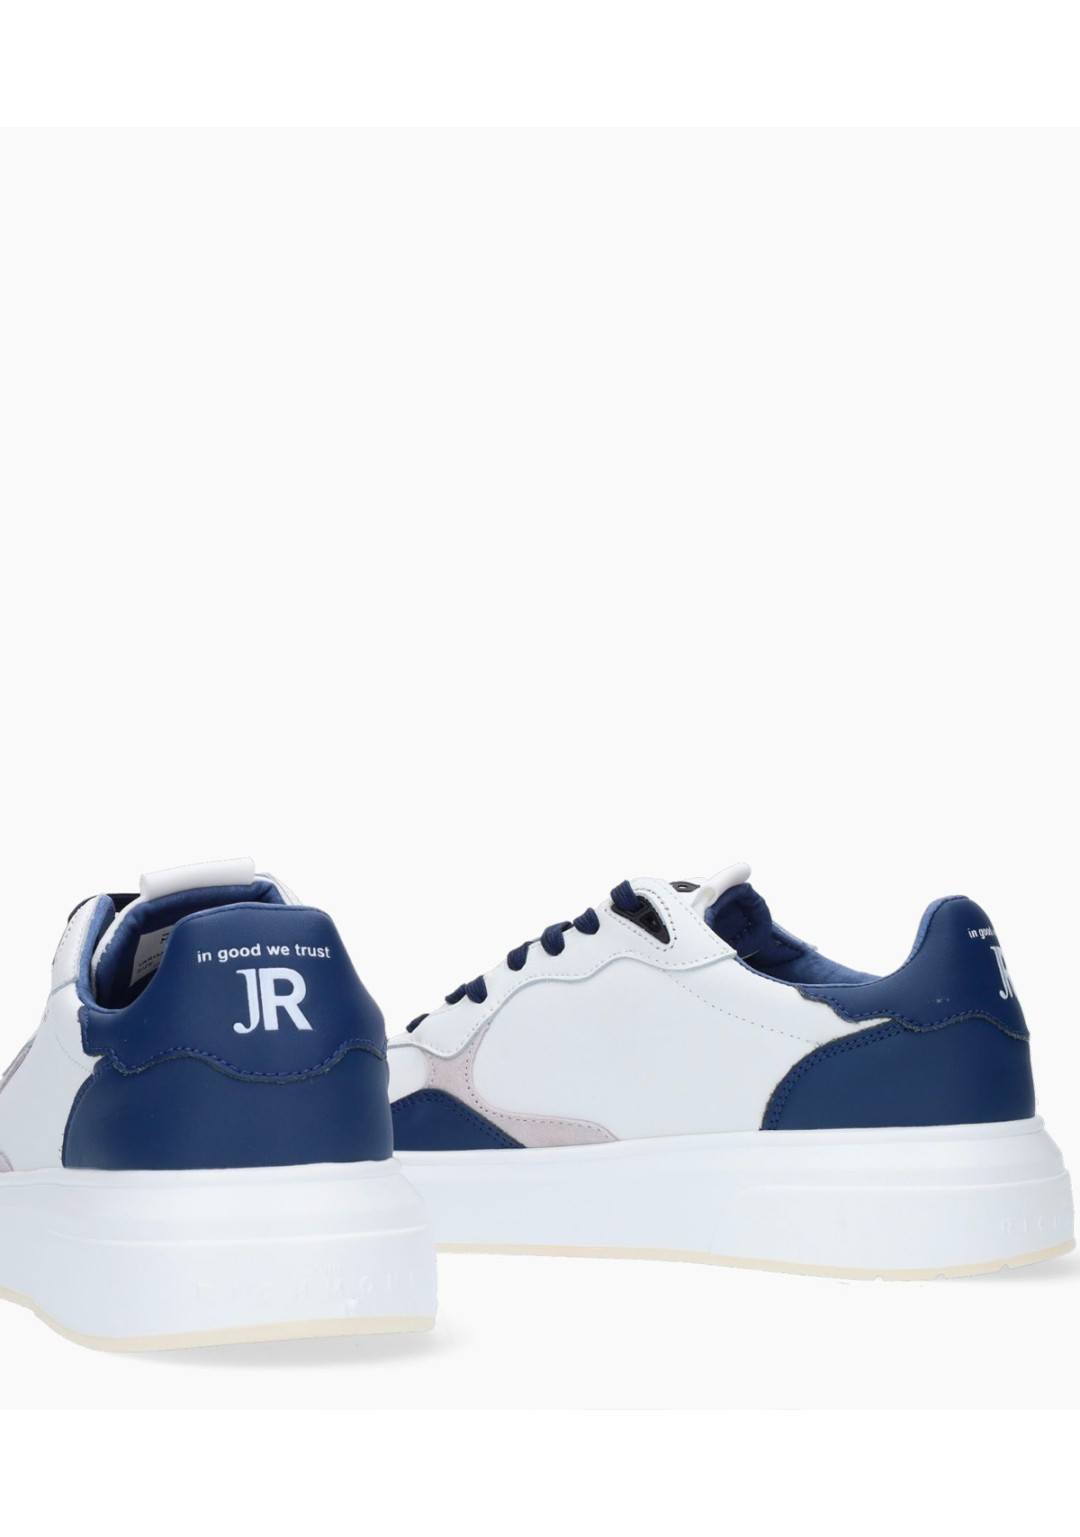 John Richmond - Sneaker Rip.Blu - Uomo - 18136 B